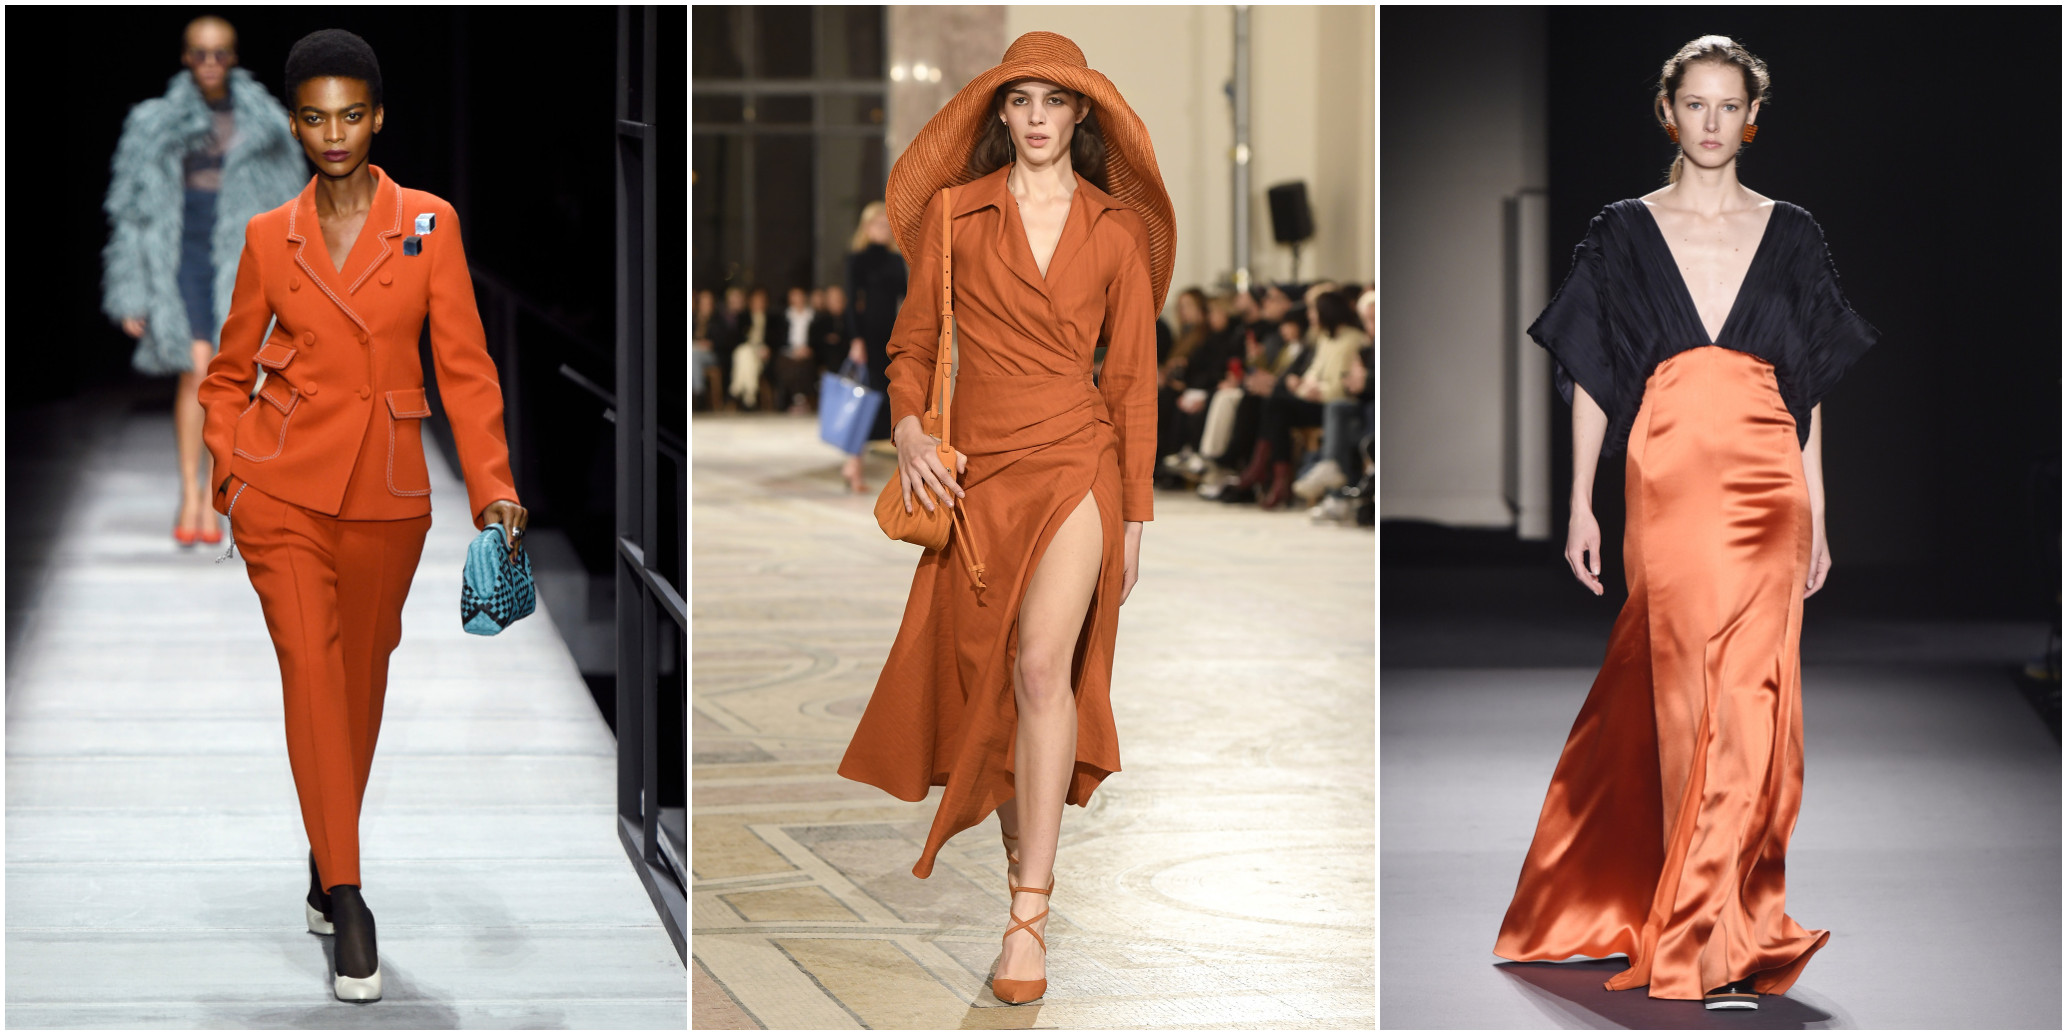 Russet Orange Wholesale7 Blog Latest Fashion News And Trends